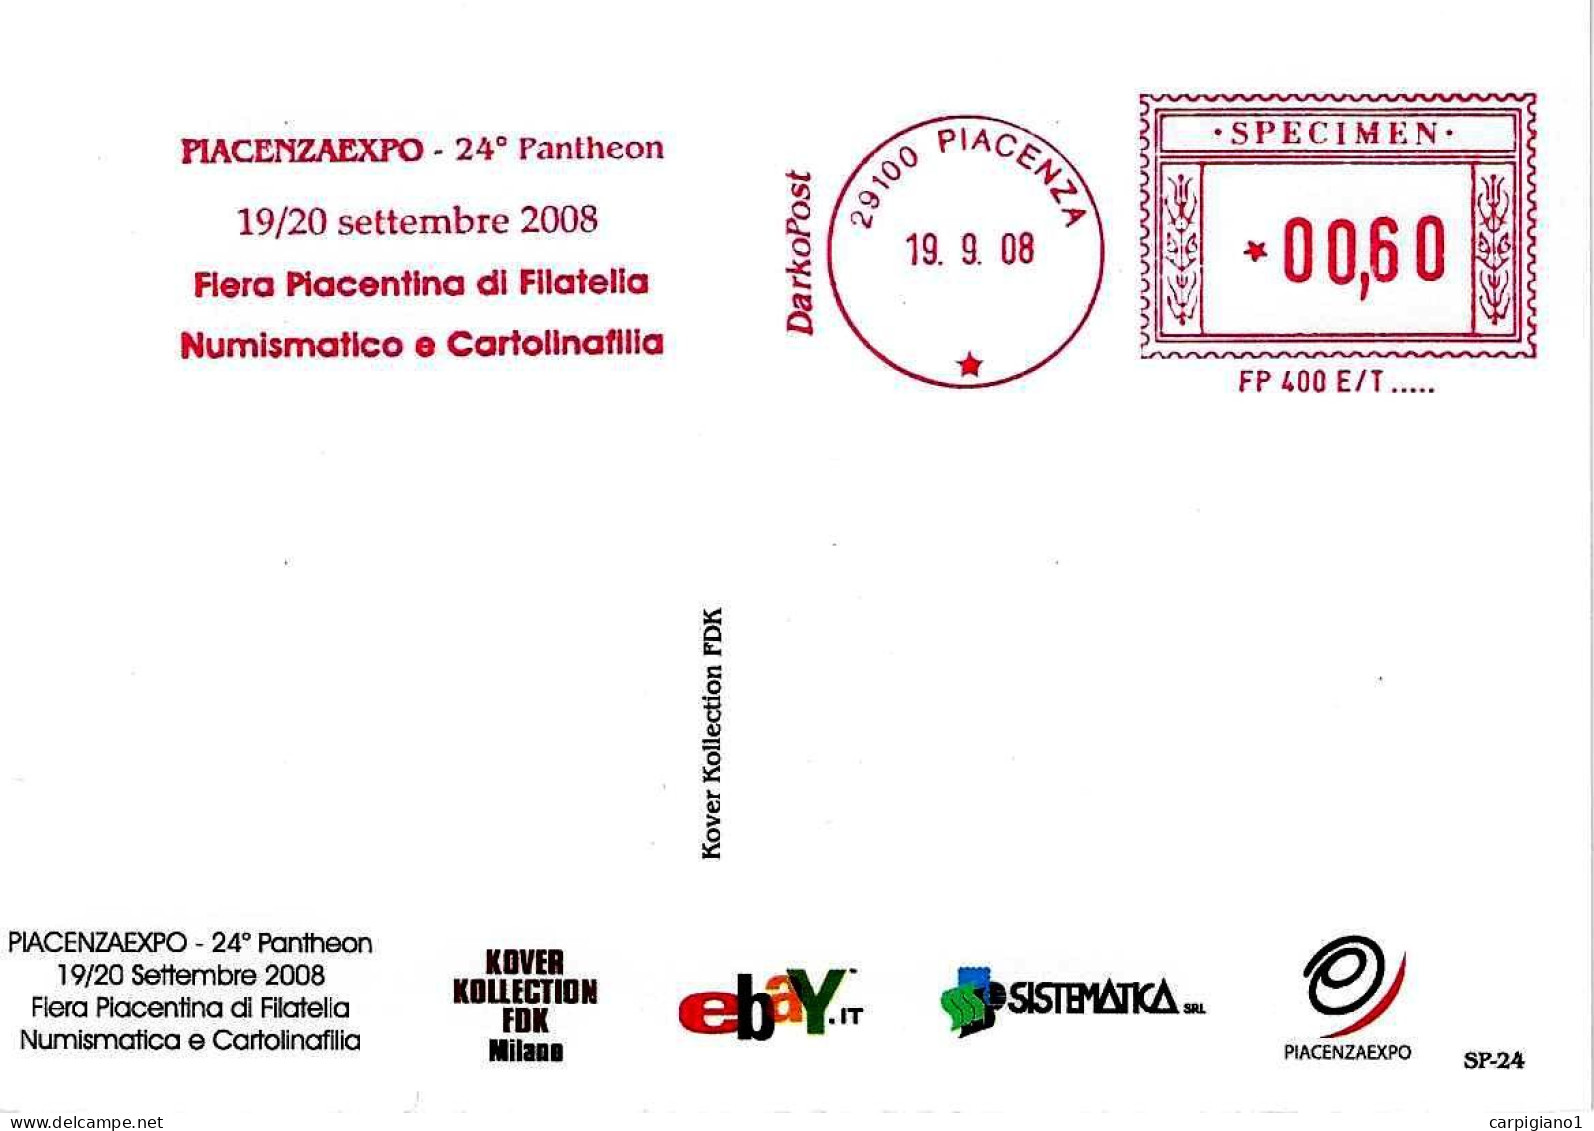 ITALIA - 2008 PIACENZA 24° Pantheon Piacenzaexpo Fiera Filatelia - Ema Affrancatura Mecc. Rossa Red Meter SPECIMEN - 653 - 2001-10: Marcofilia